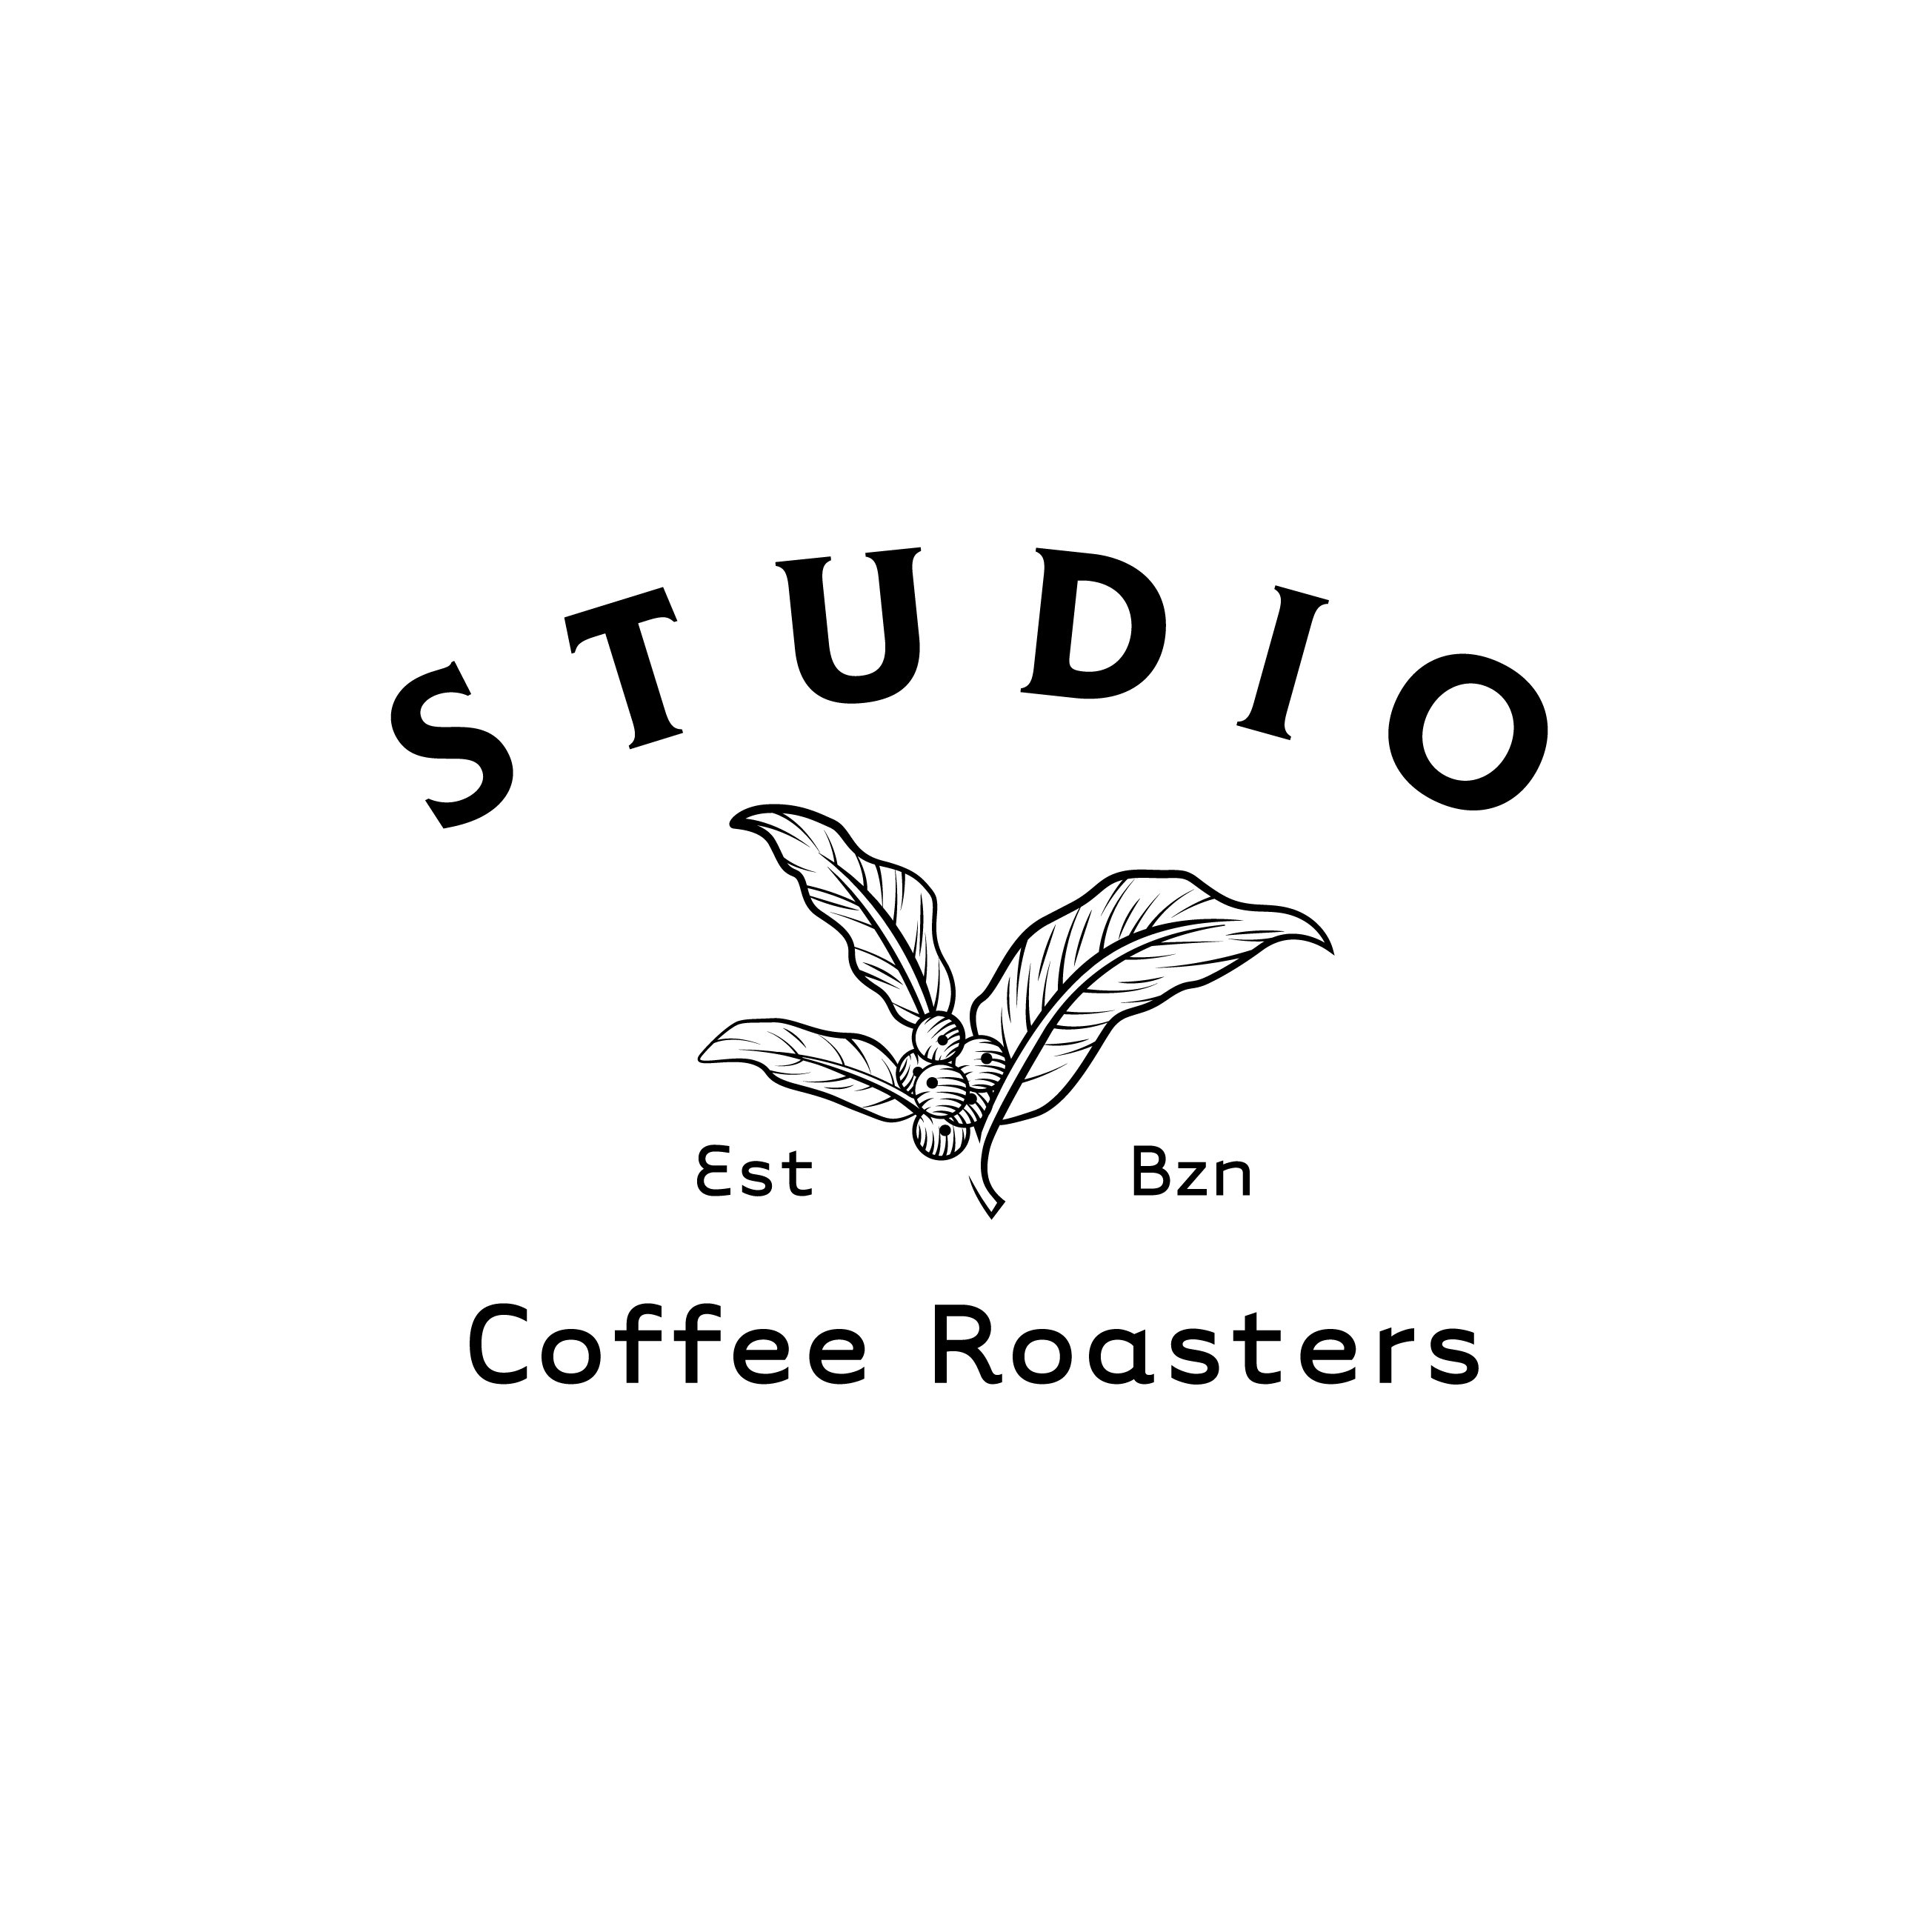 Introducing Studio Coffee Roasters!